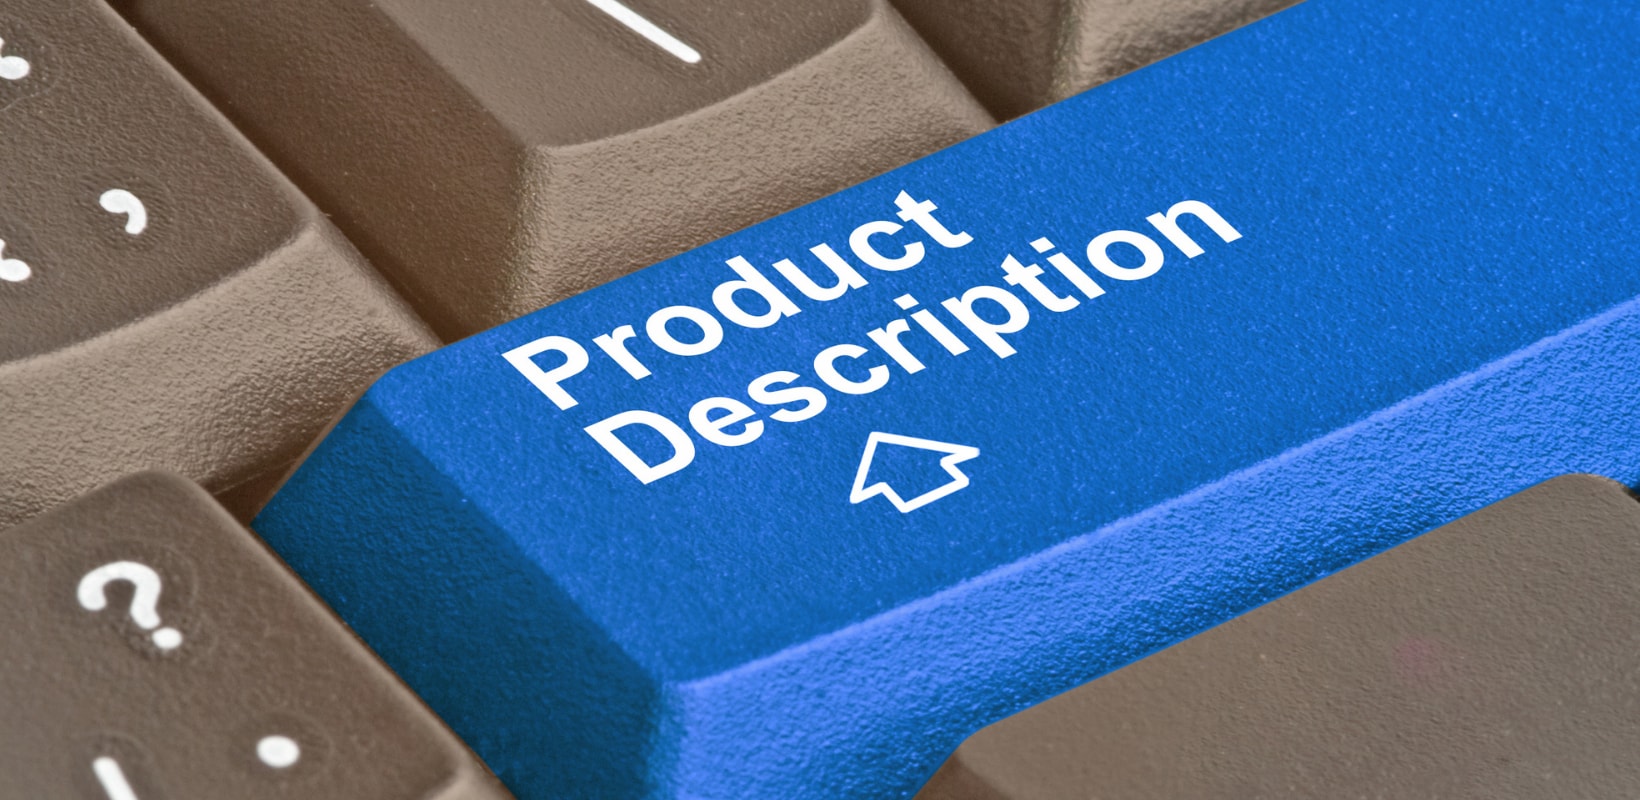 Top 15 Product Description Generator Tools (+ Pricing, Key Features)